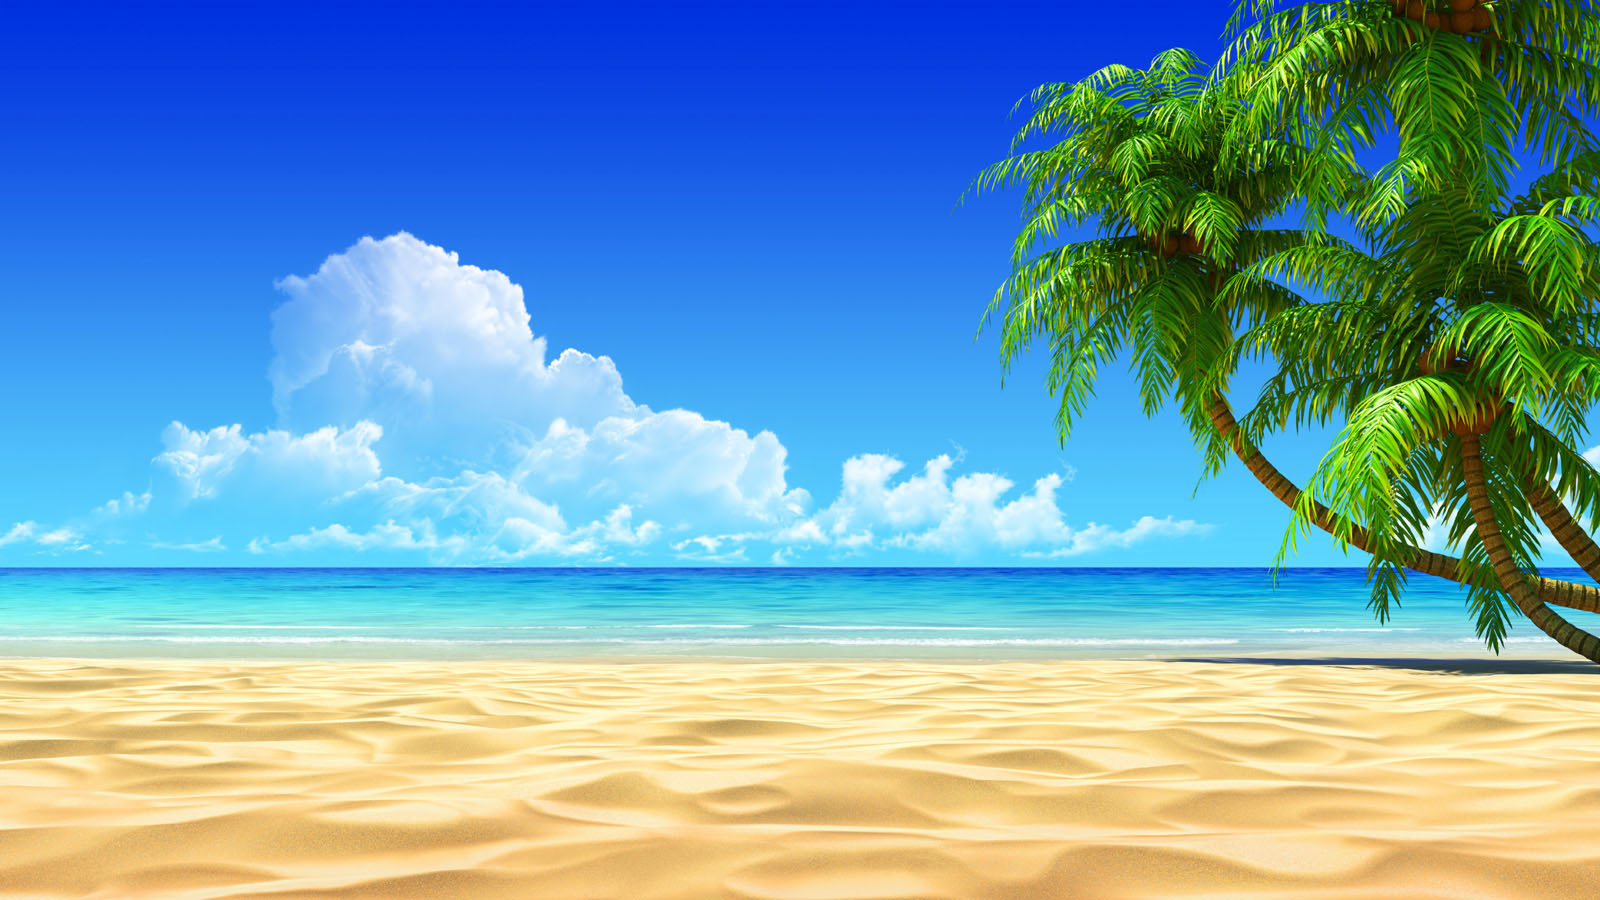 45 Beach Wallpaper For Mobile And Desktop In Full HD For